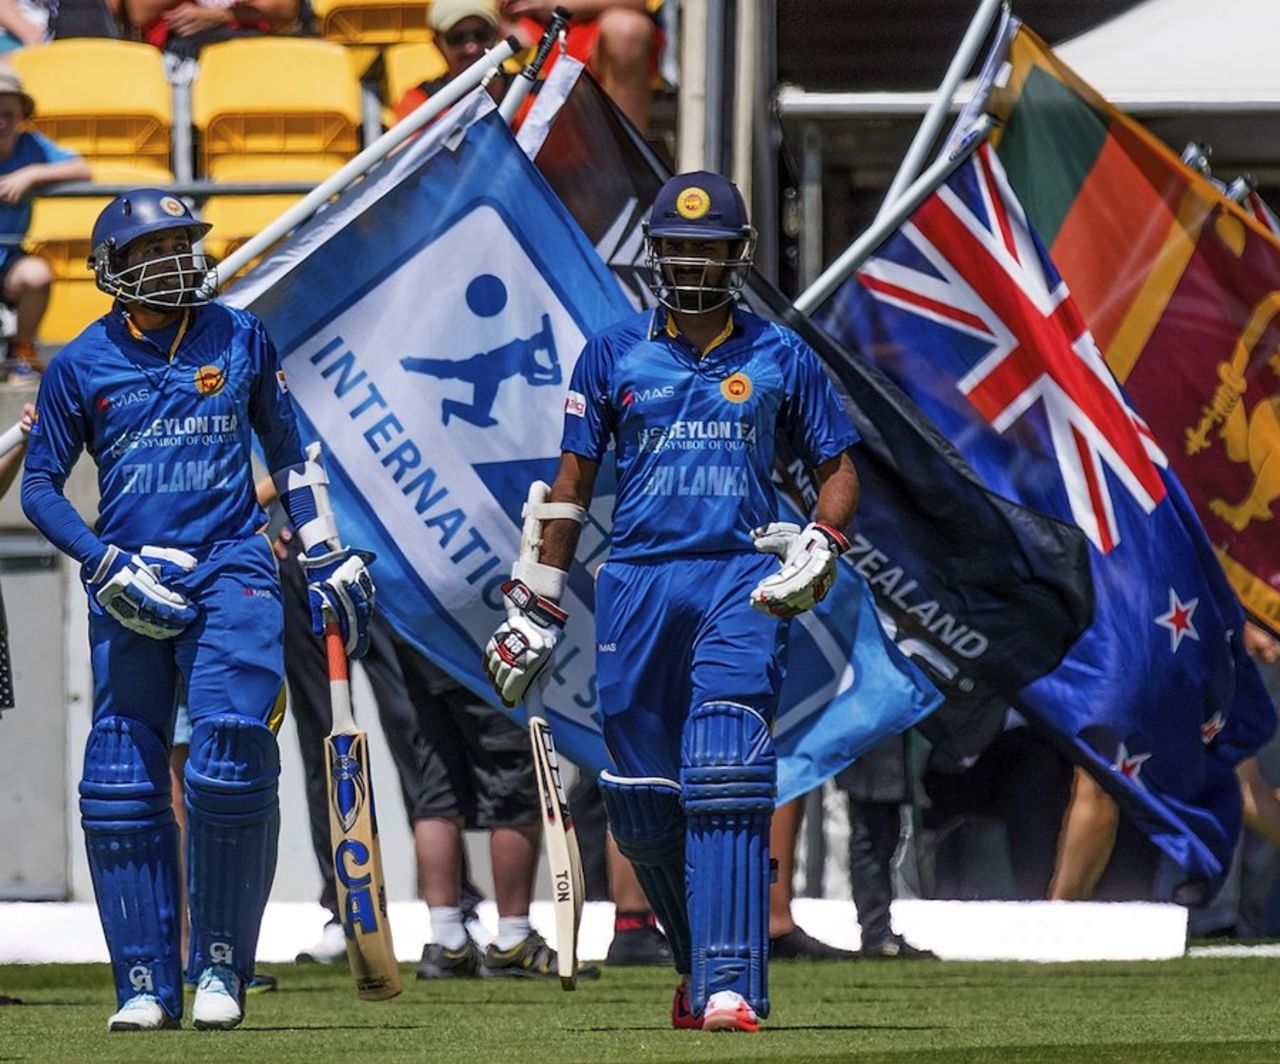 Tillakaratne Dilshan and Lahiru Thirimanne walk out to bat, New Zealand v Sri Lanka, 7th ODI, Wellington, January 29, 2015